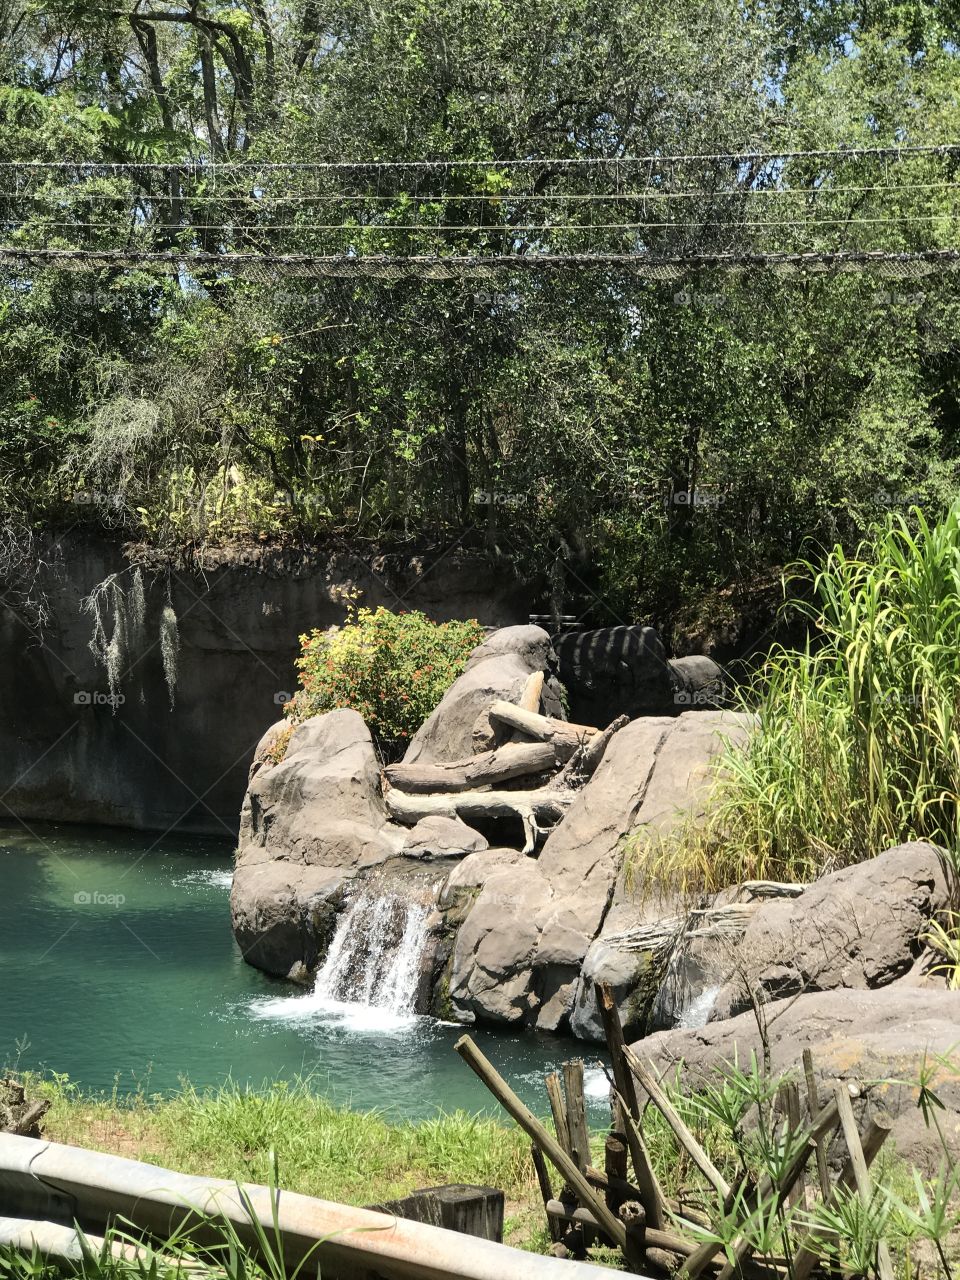 Disney Animal Kingdom - Orlando, Florida 
Safari